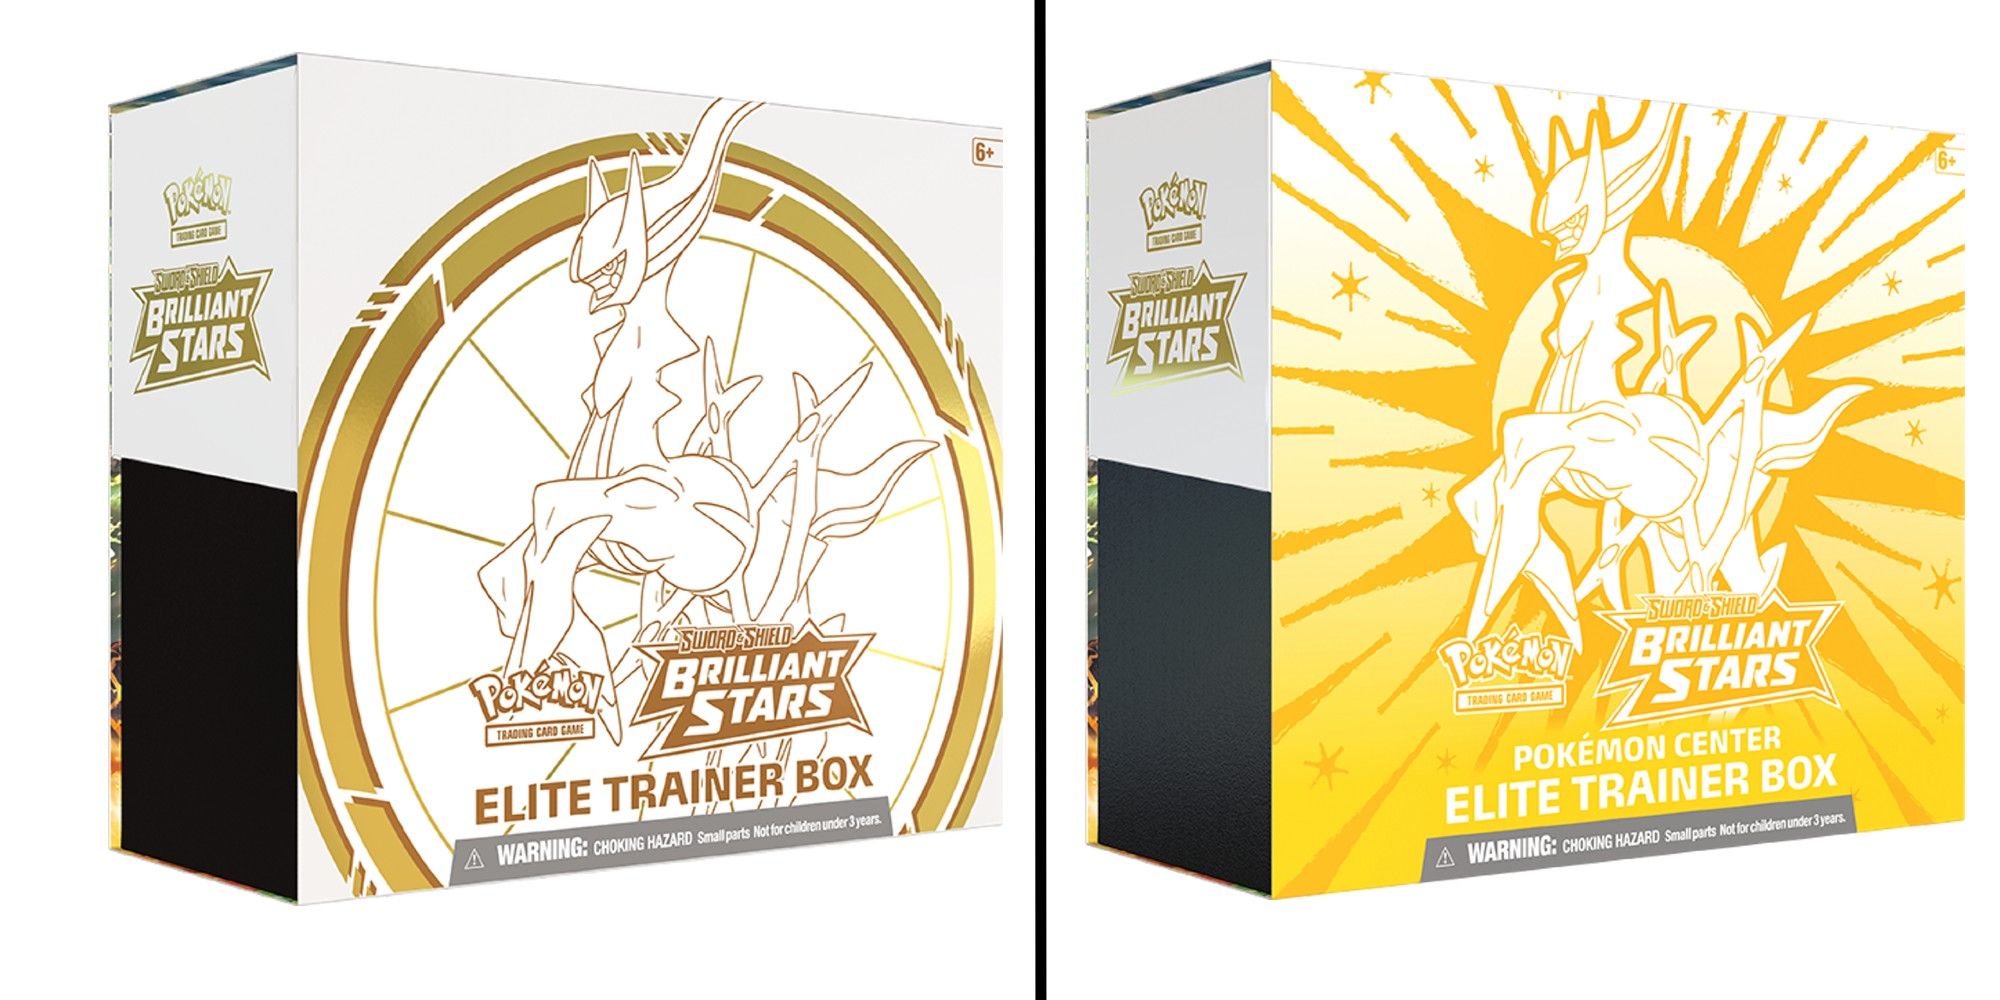 Brilliant Stars Elite Trainer Box, white box on the left, gold box on the right. Arceus on the cover.